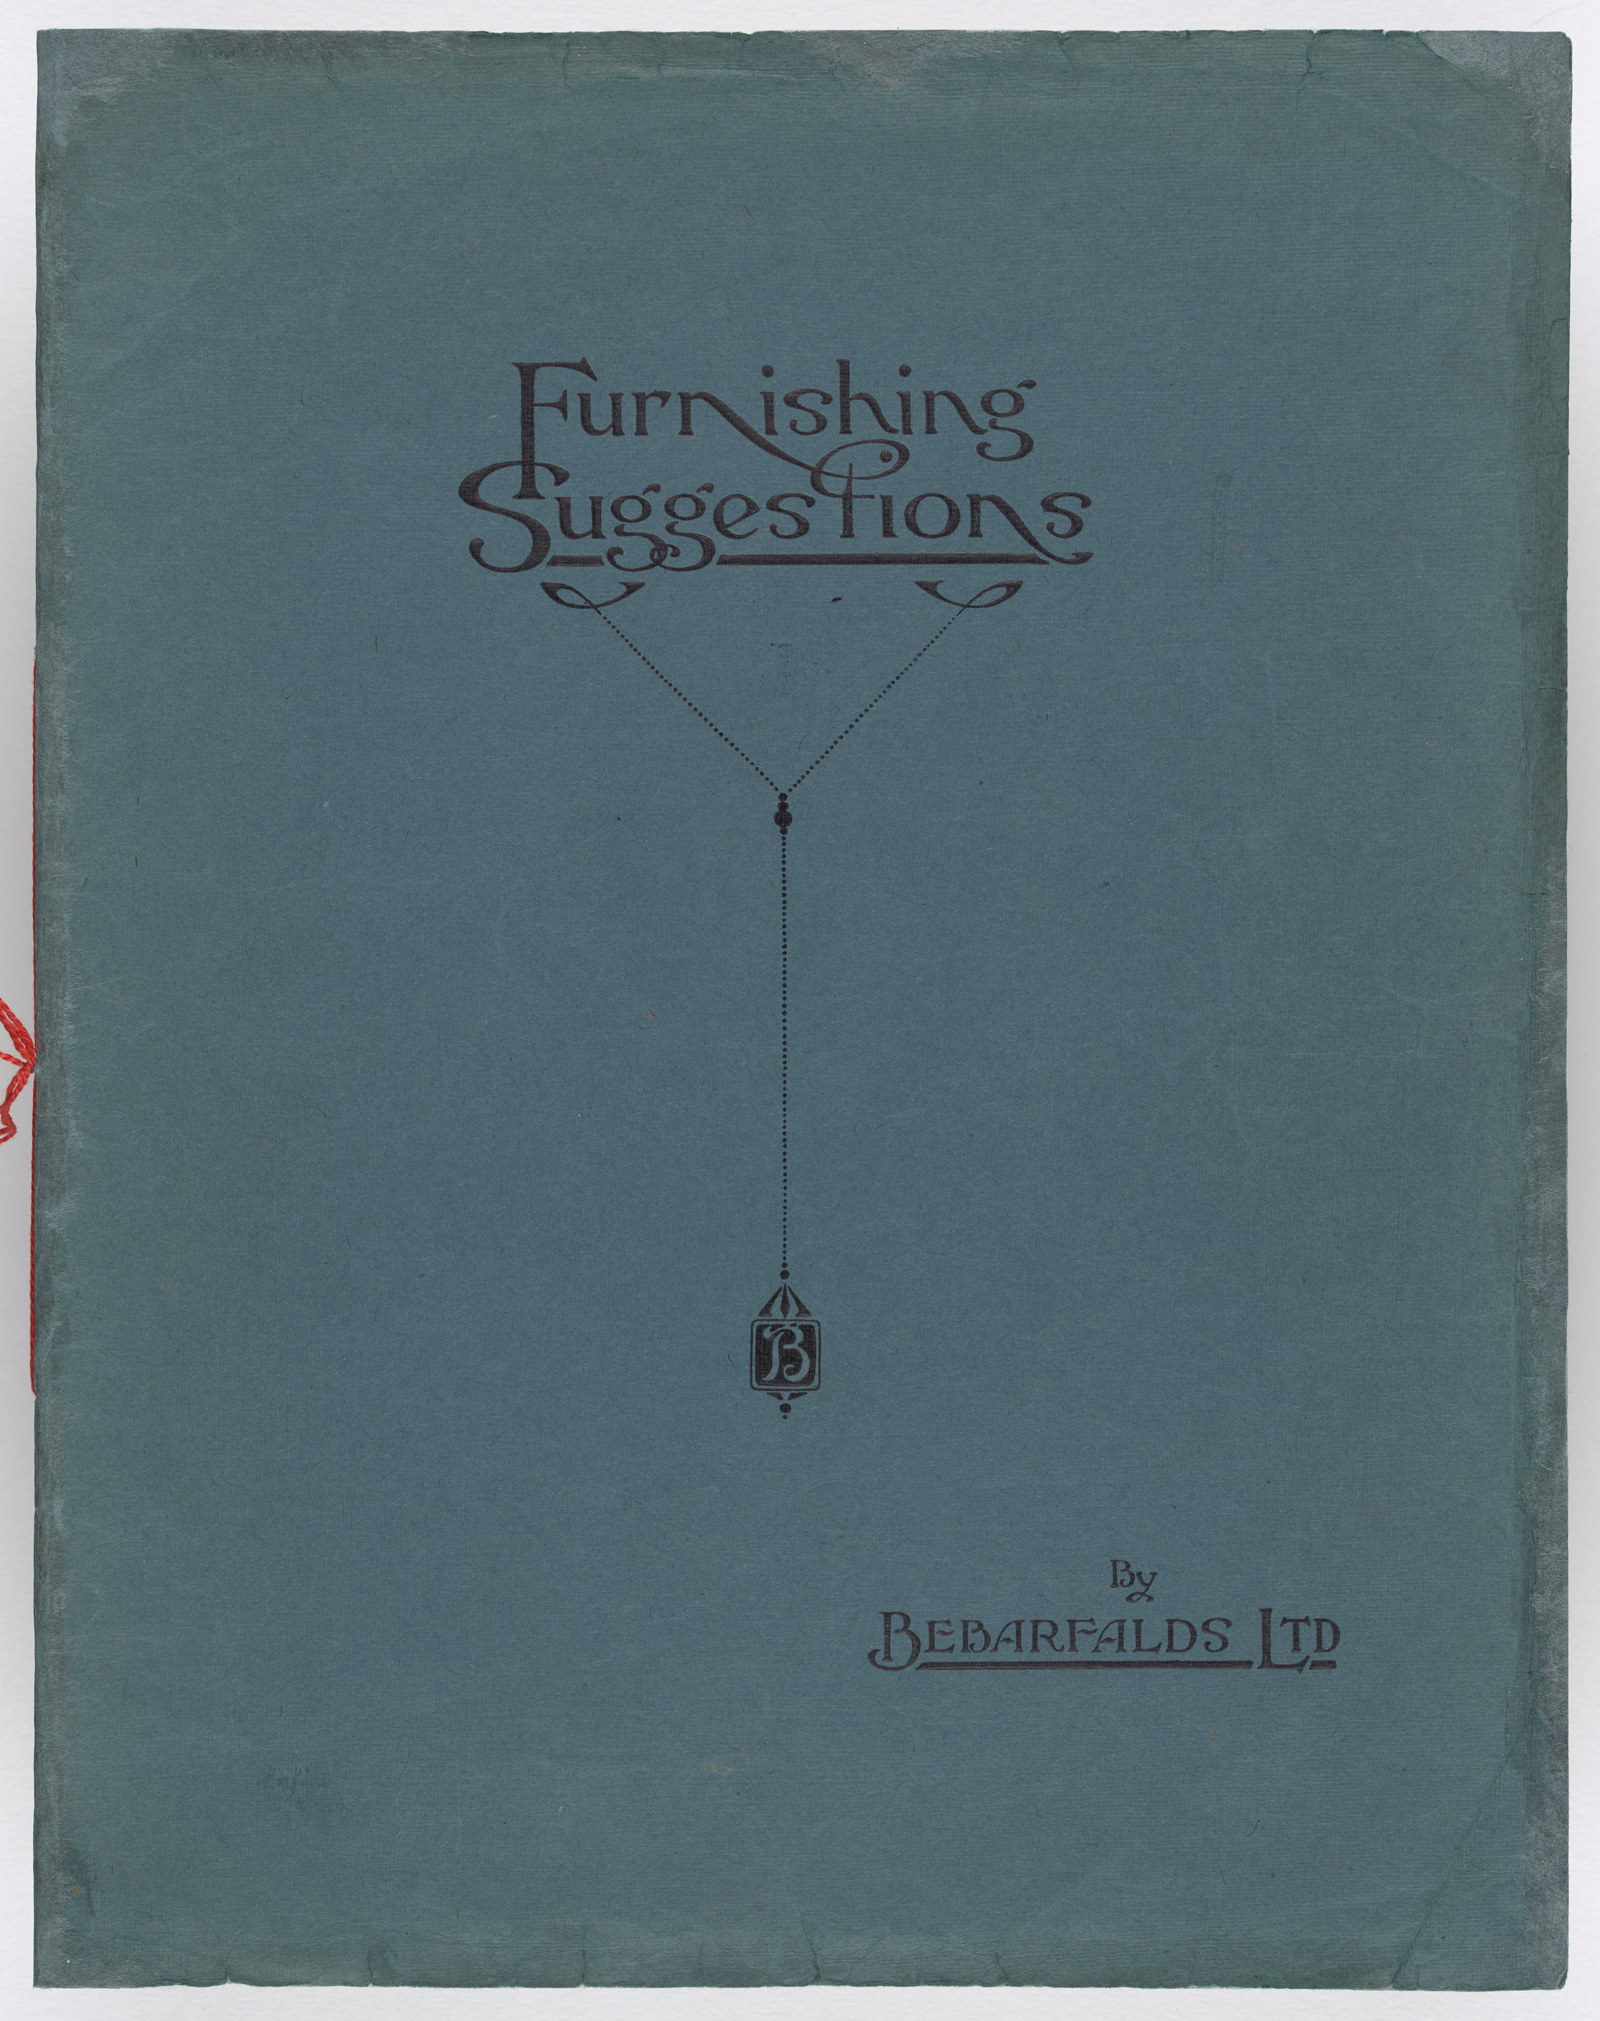 Furnishing suggestions / Bebarfalds Ltd. [trade catalogue]